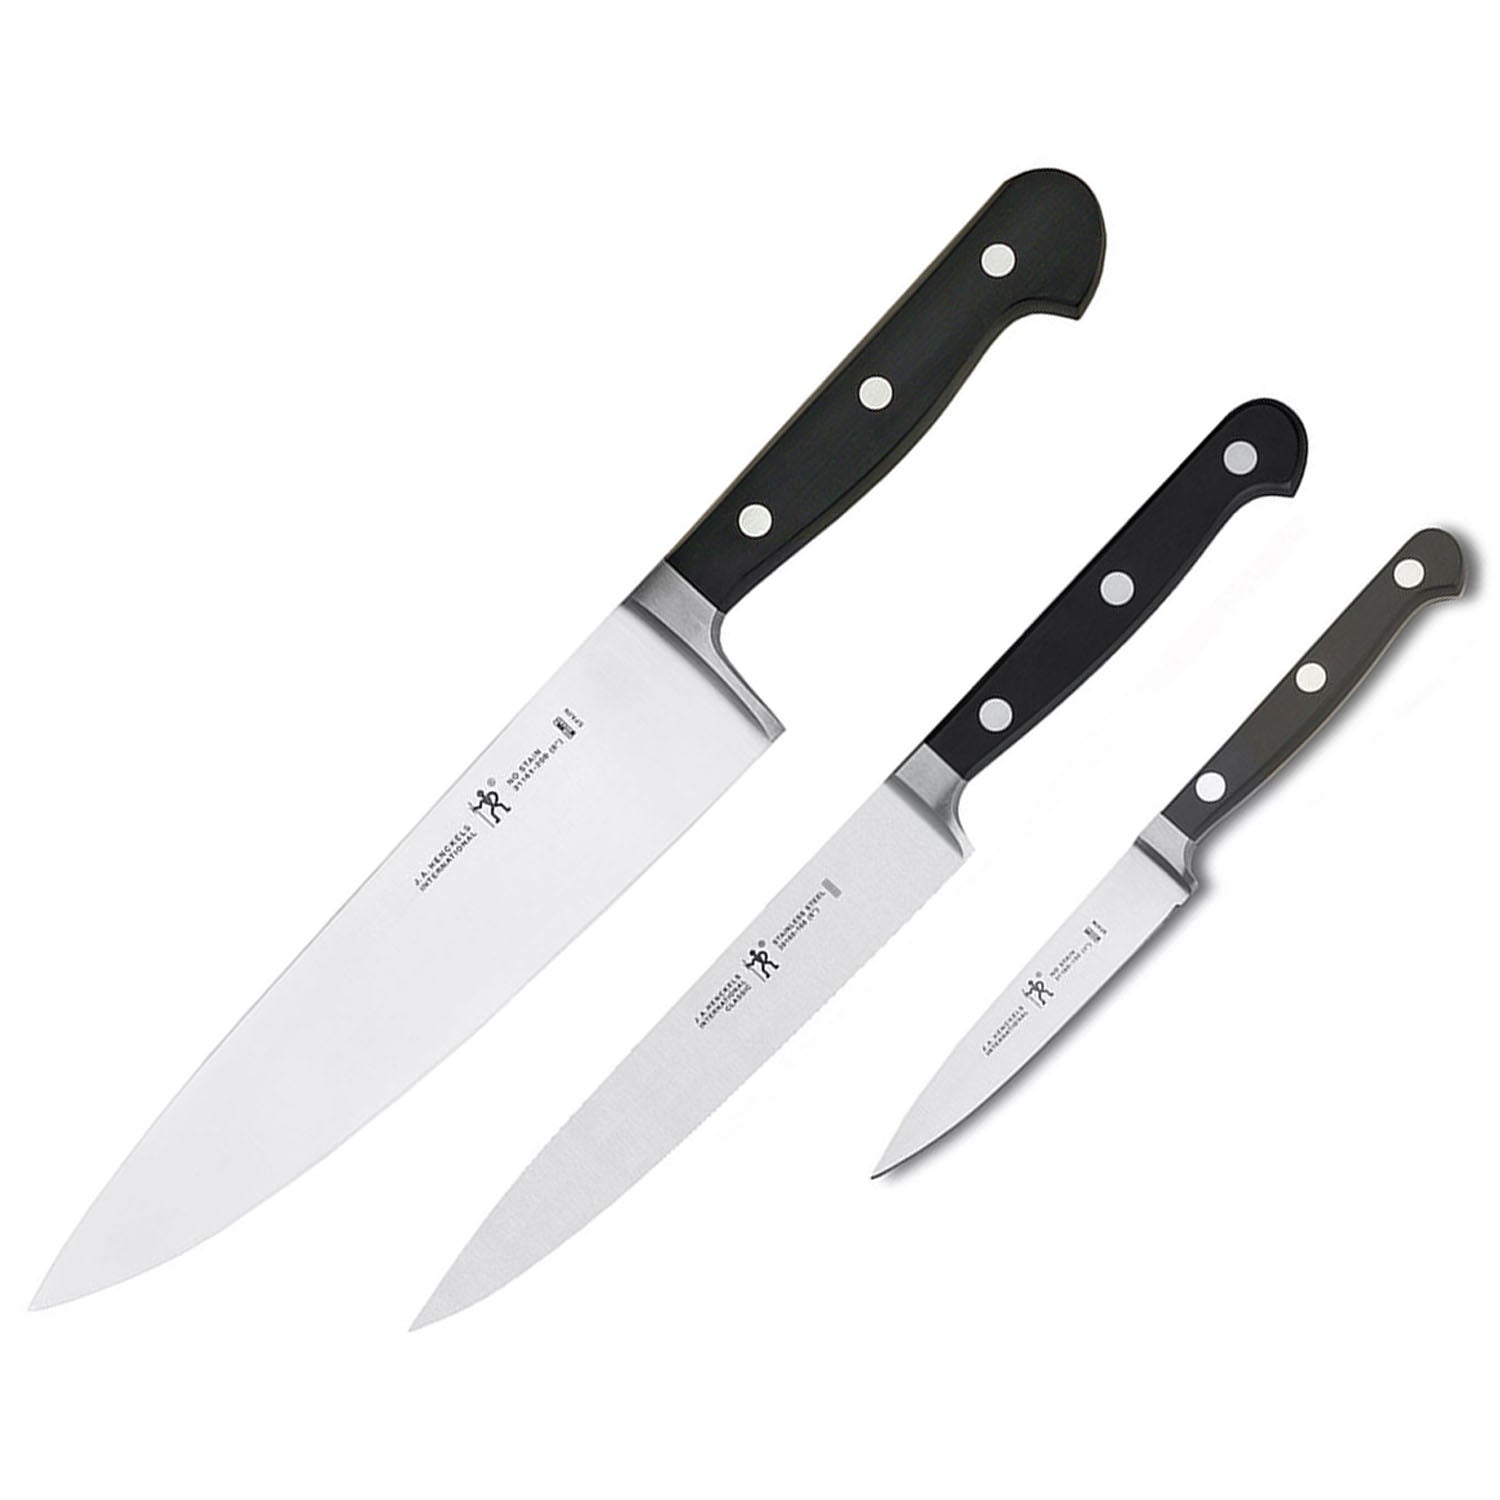 J.A. Henckels International 3-Pc Paring Knife Set - Black